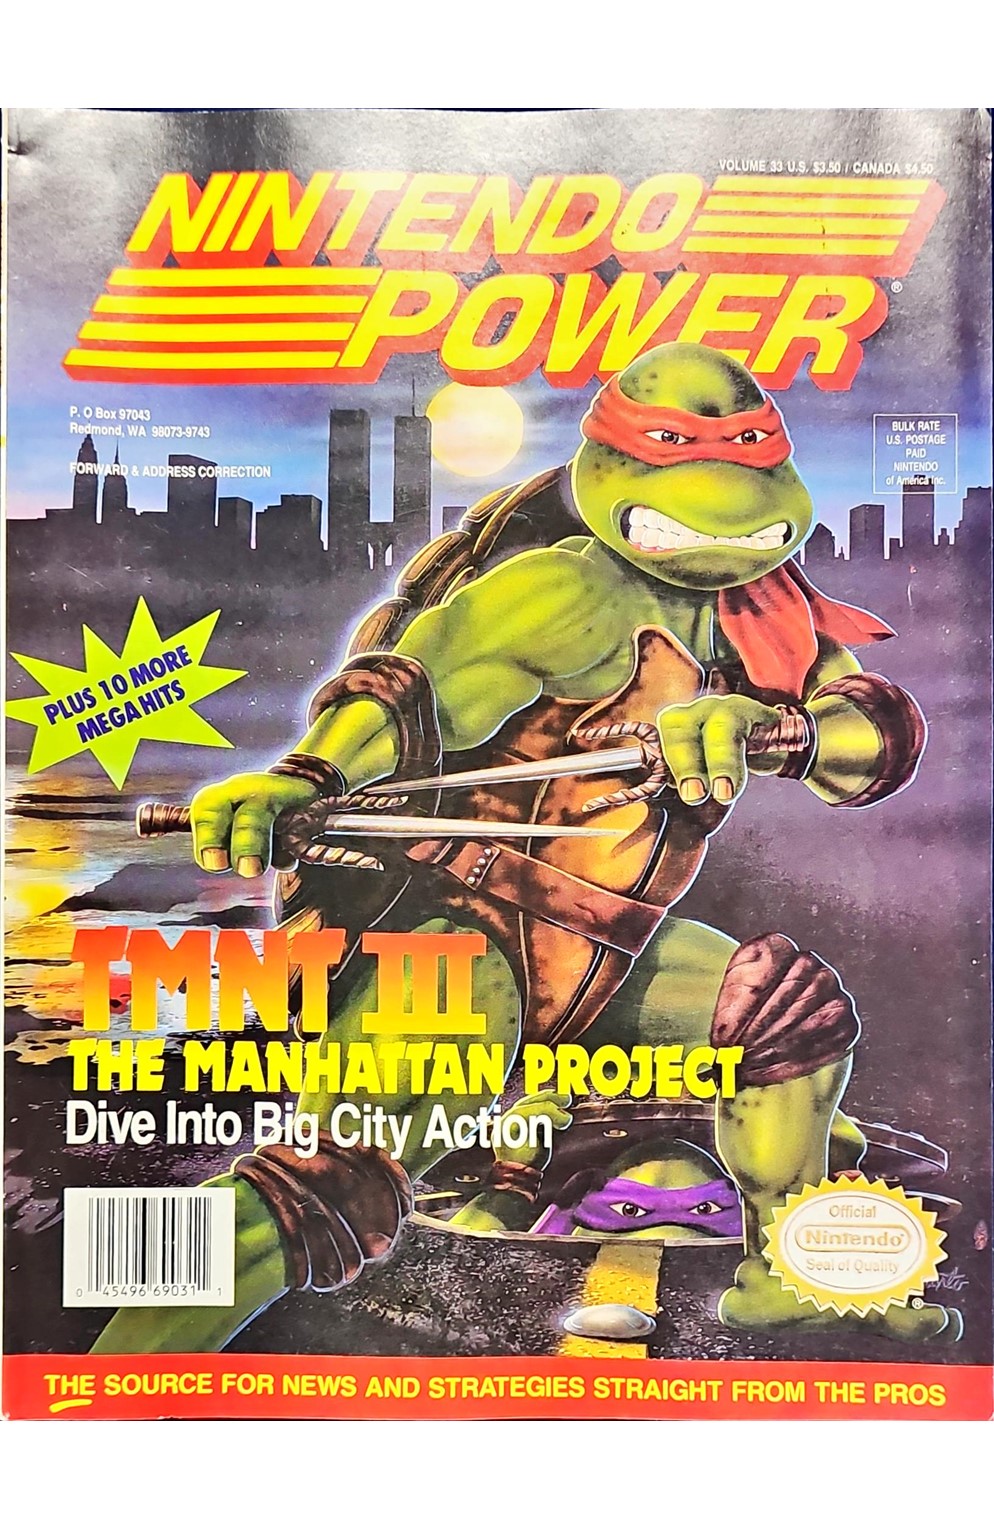 Nintendo Power Volume 33 Teenage Mutant Ninja Turtles 3 The Manhattan Project With Poster